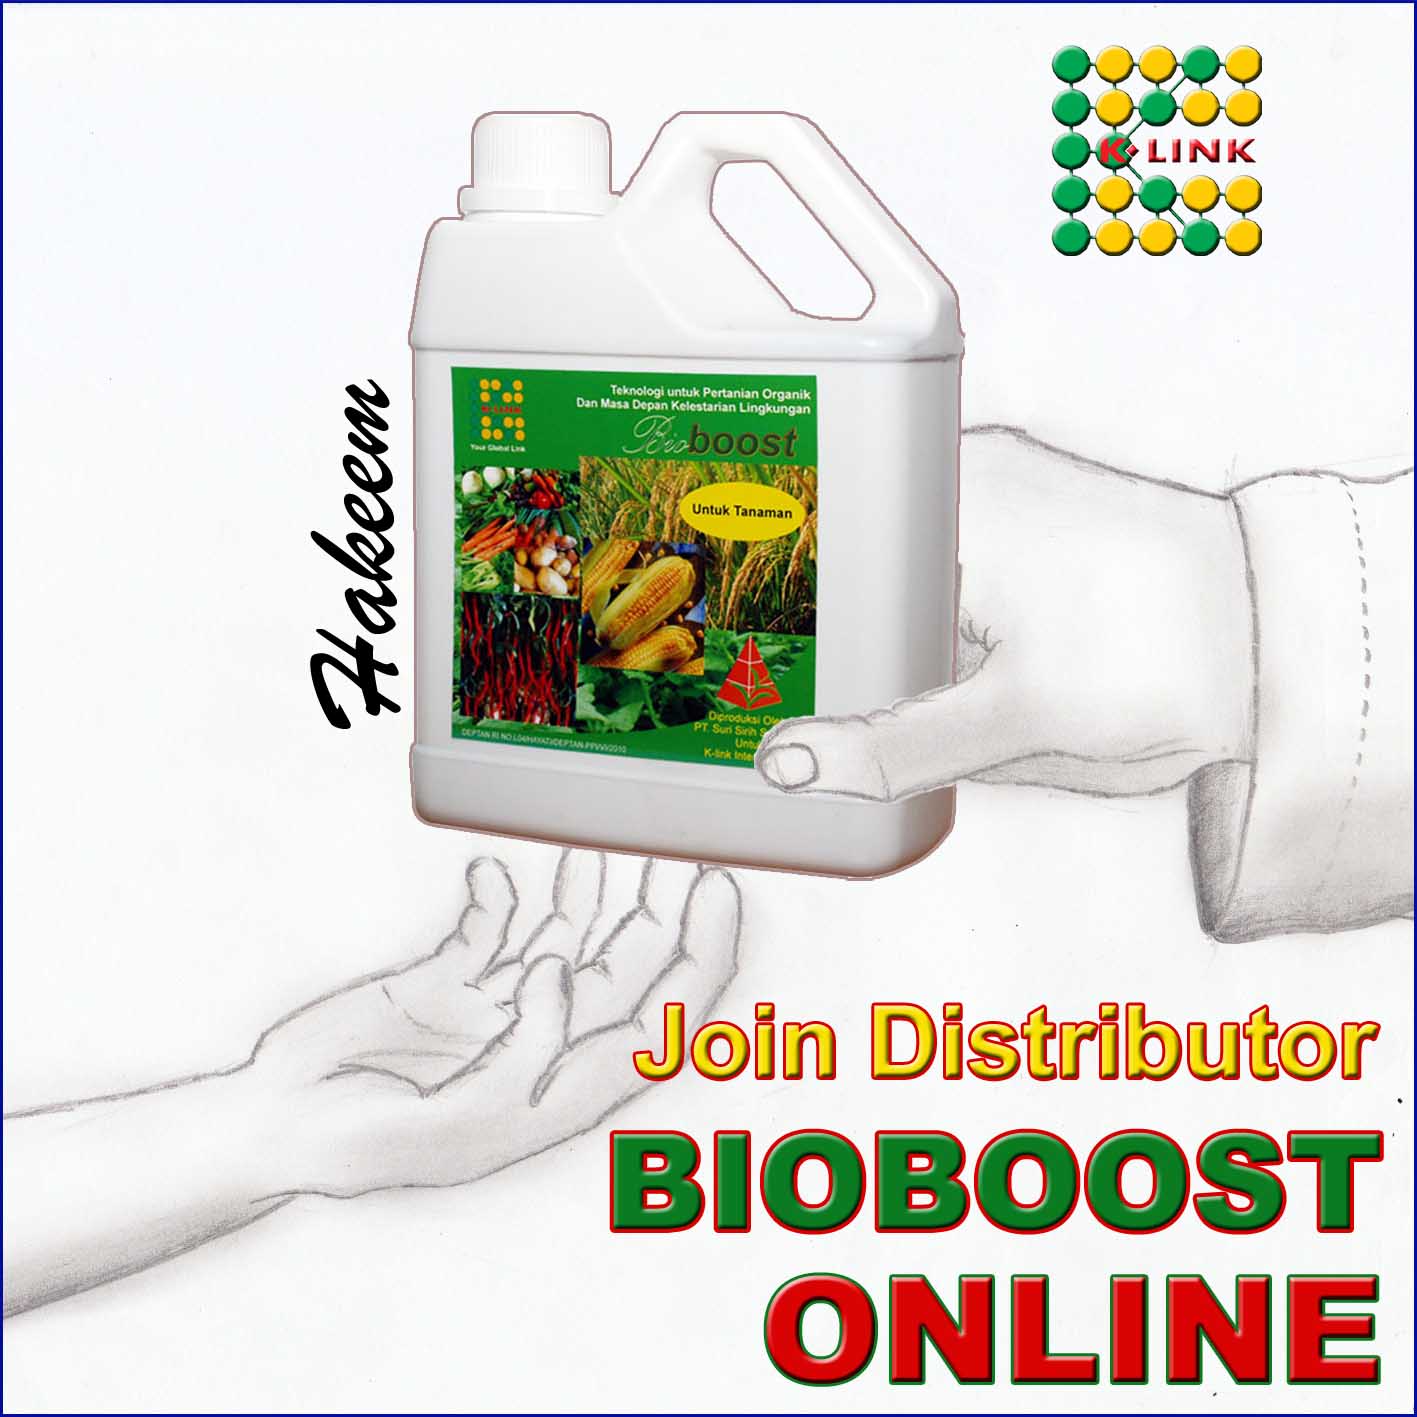 Join Distributor BIOBOOST